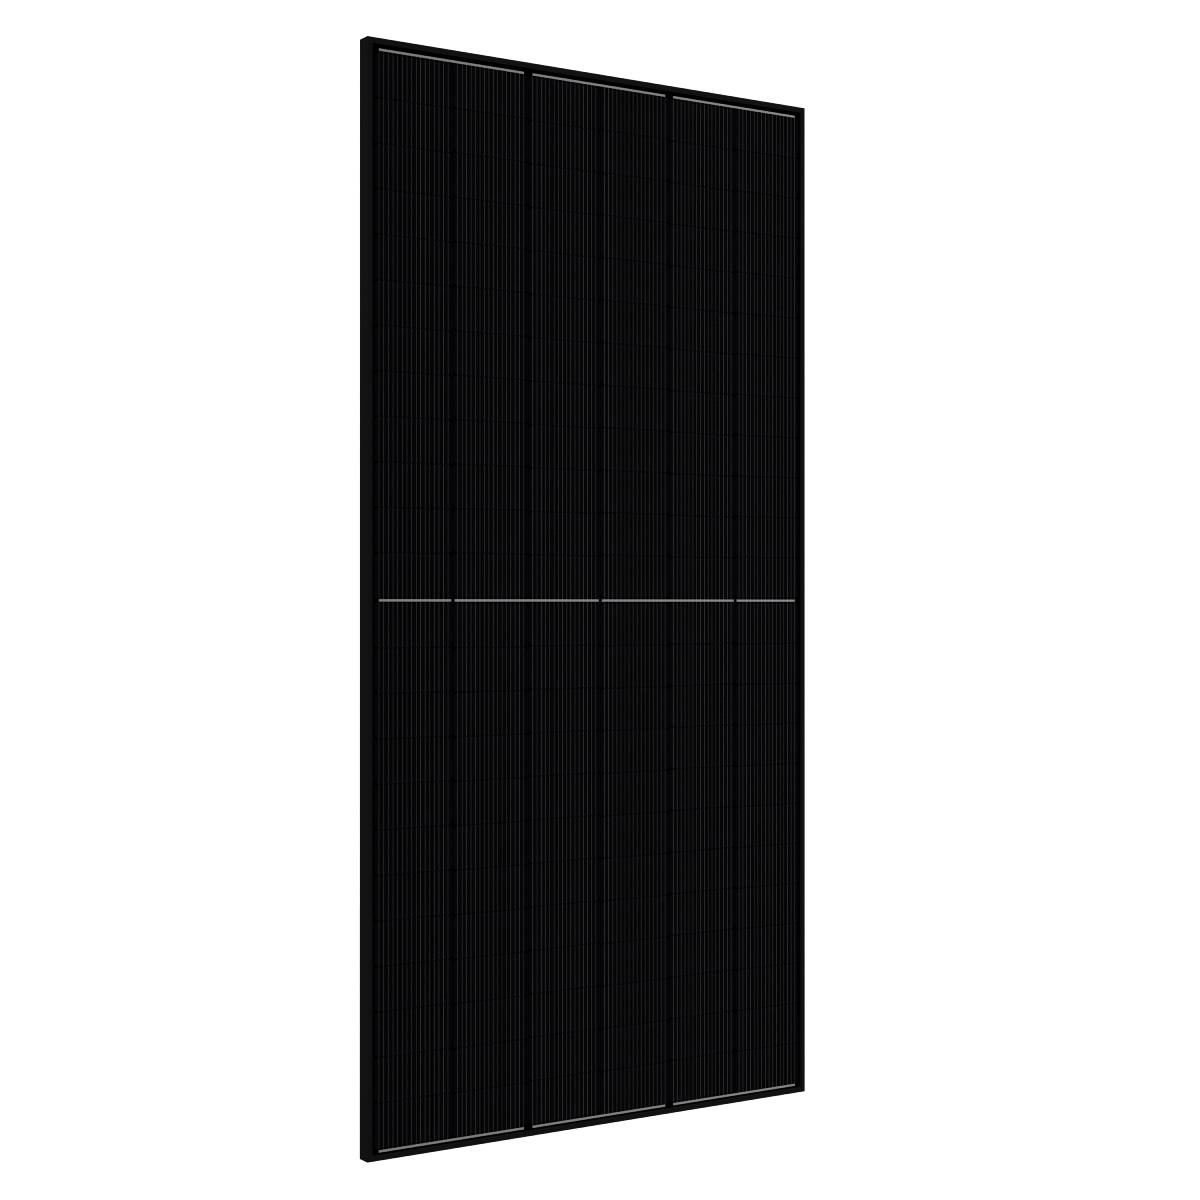 TommaTech 560Wp 144TNFB M10 TopCon Dark Series Solar Panel